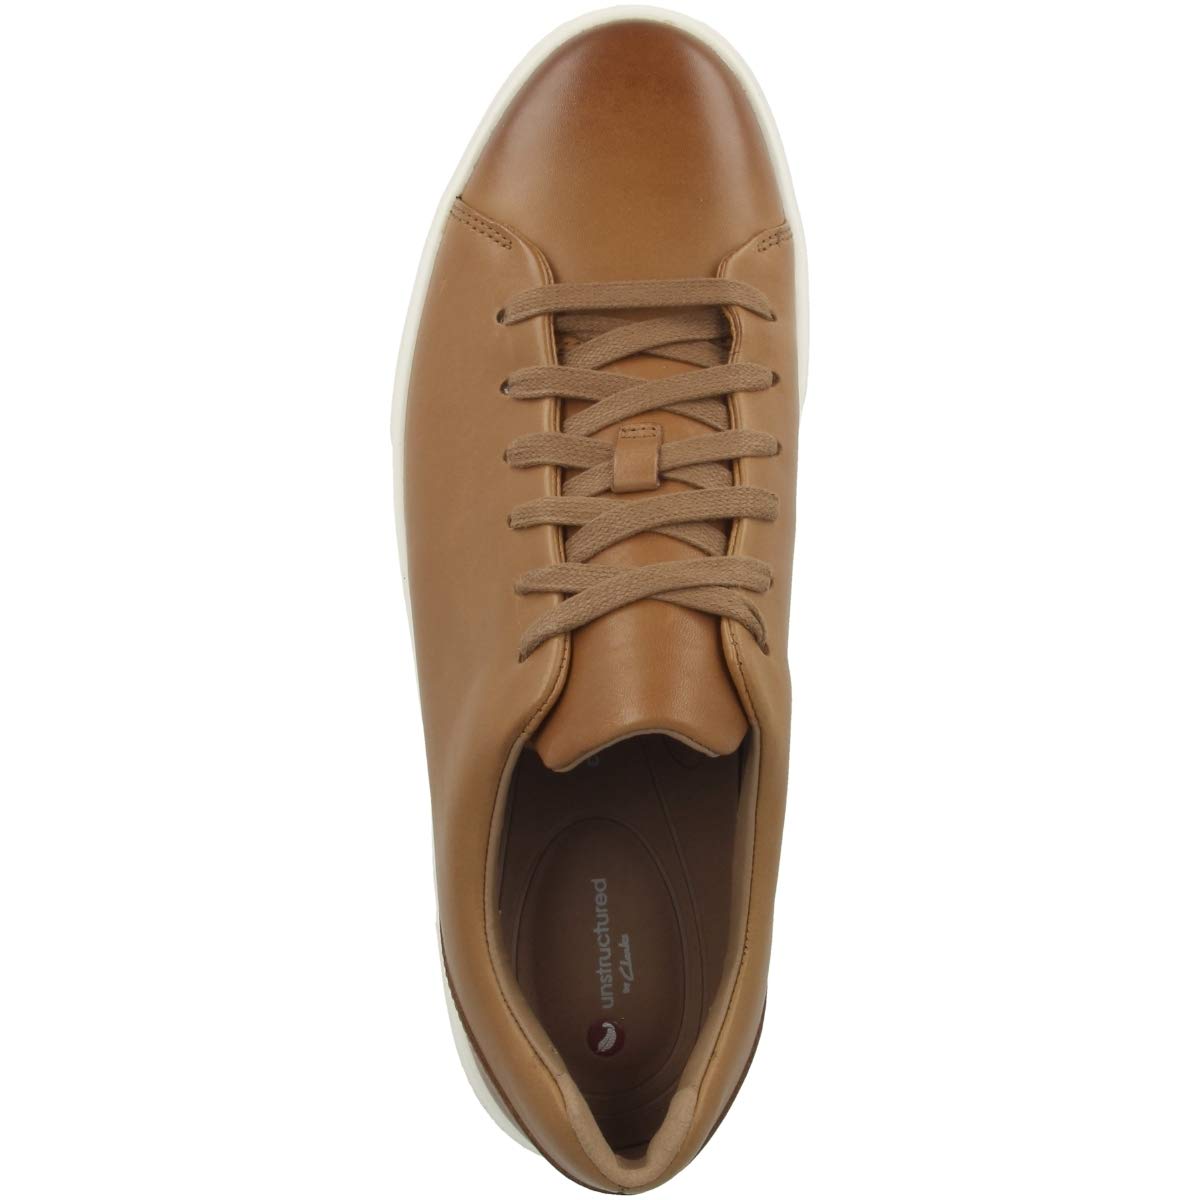 Clarks Men's Tan Leather Boat Shoes - 10.5 UK/India (45 EU)(91261409507105) 